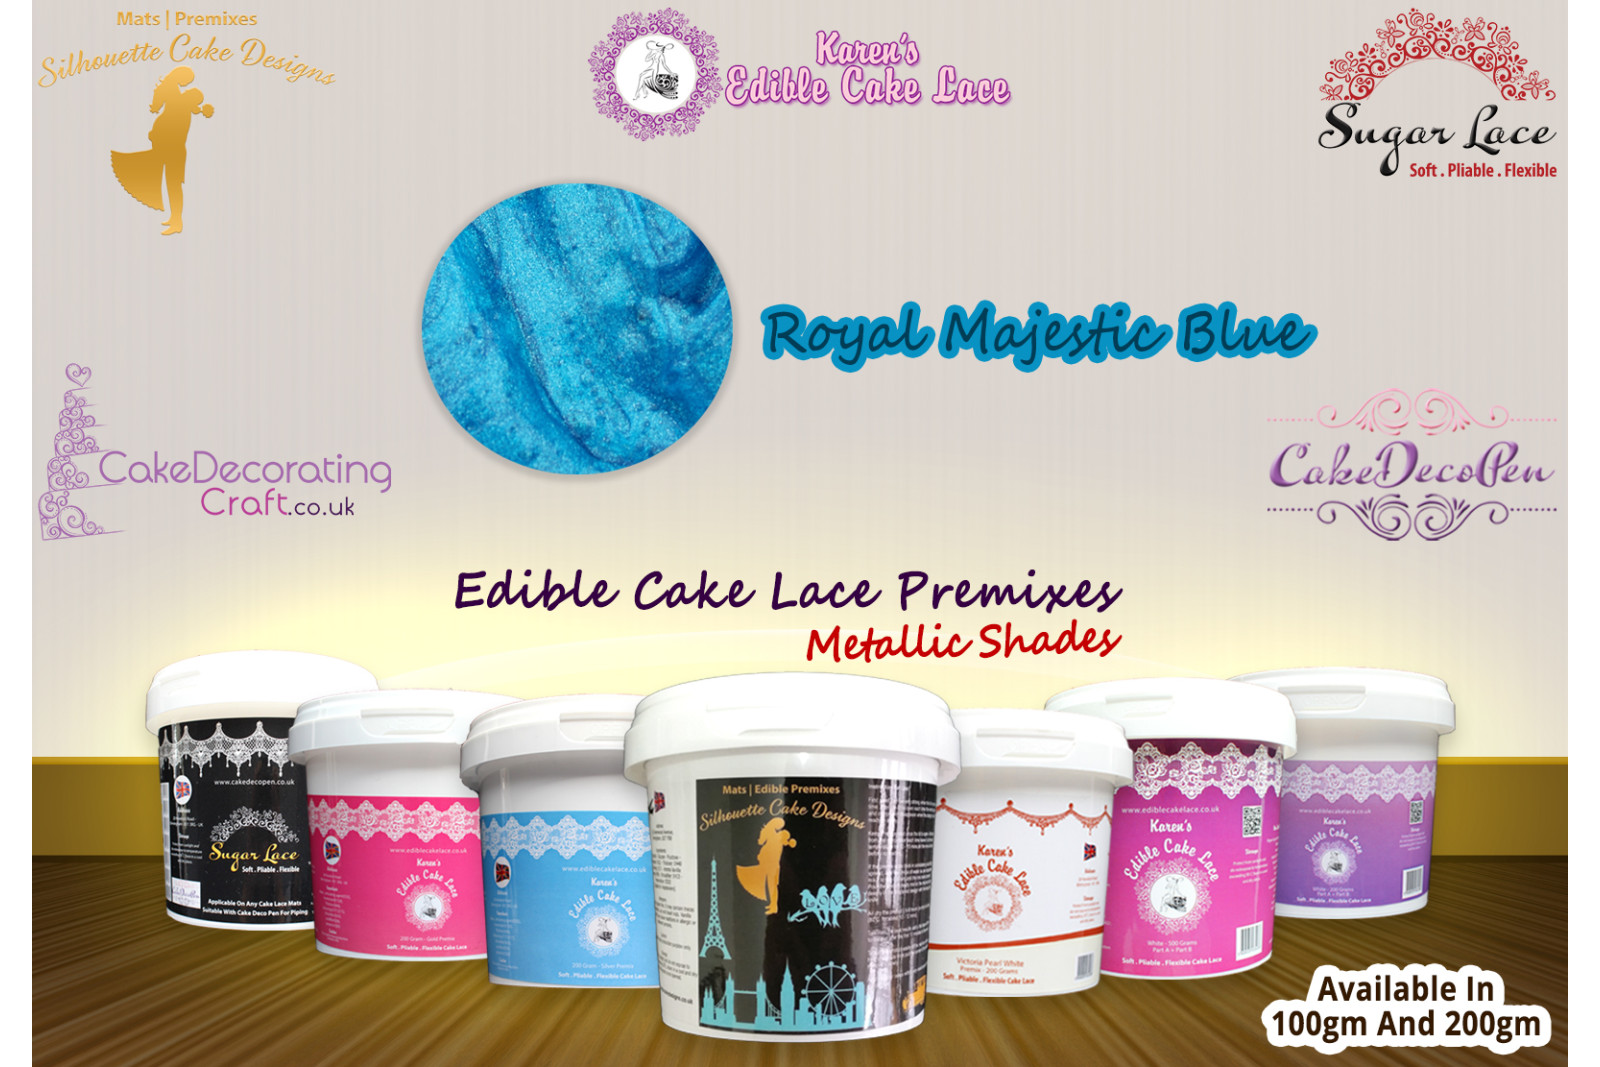 Royal Majestic Blue Colour | Silhouette Cake Design Premixes | Metallic Shade | 100 Grams